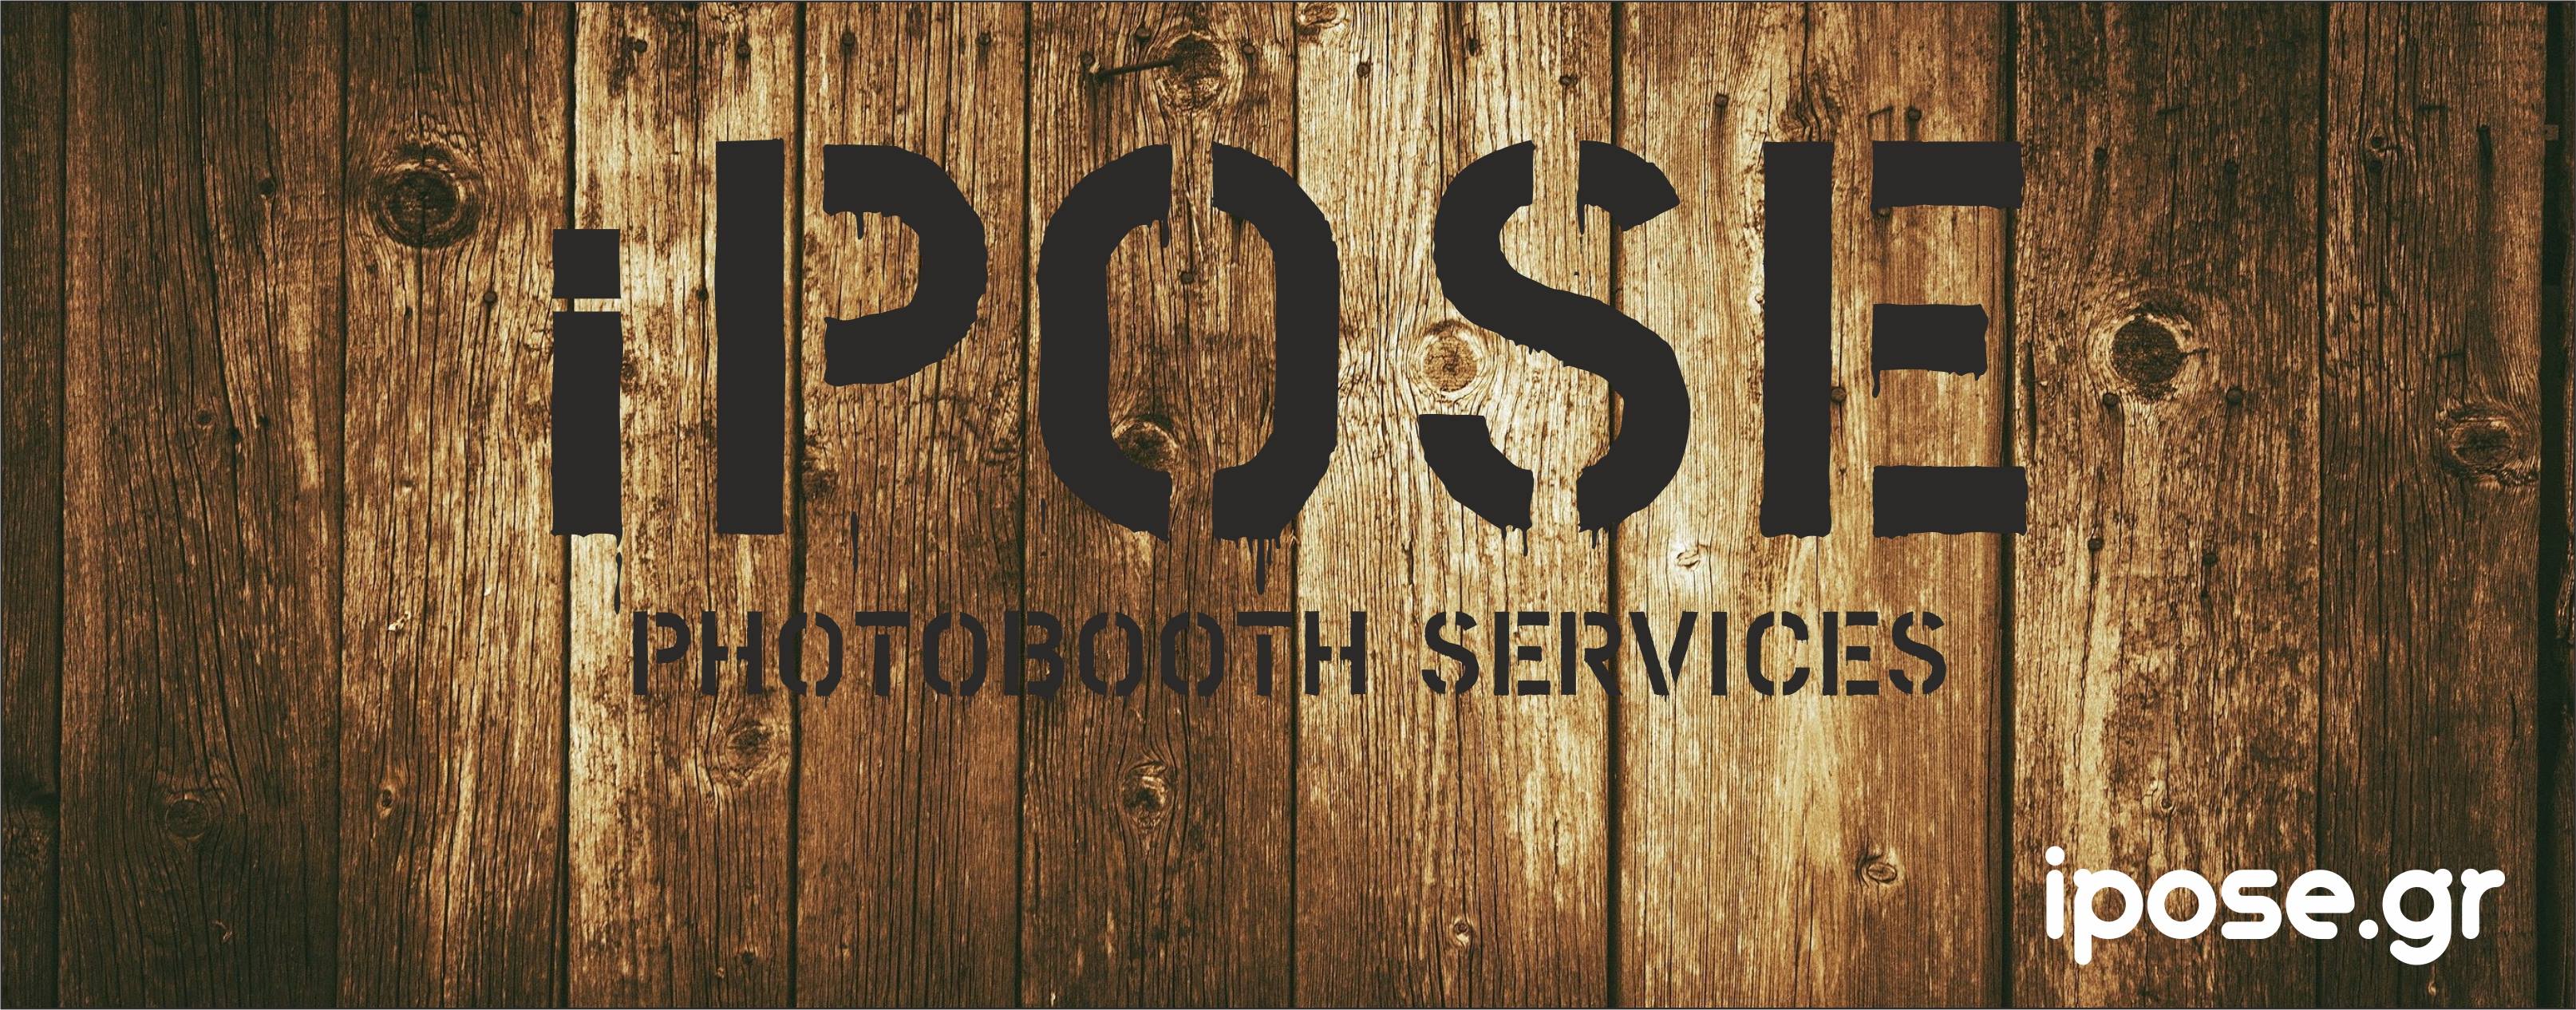 iPose Photobooth